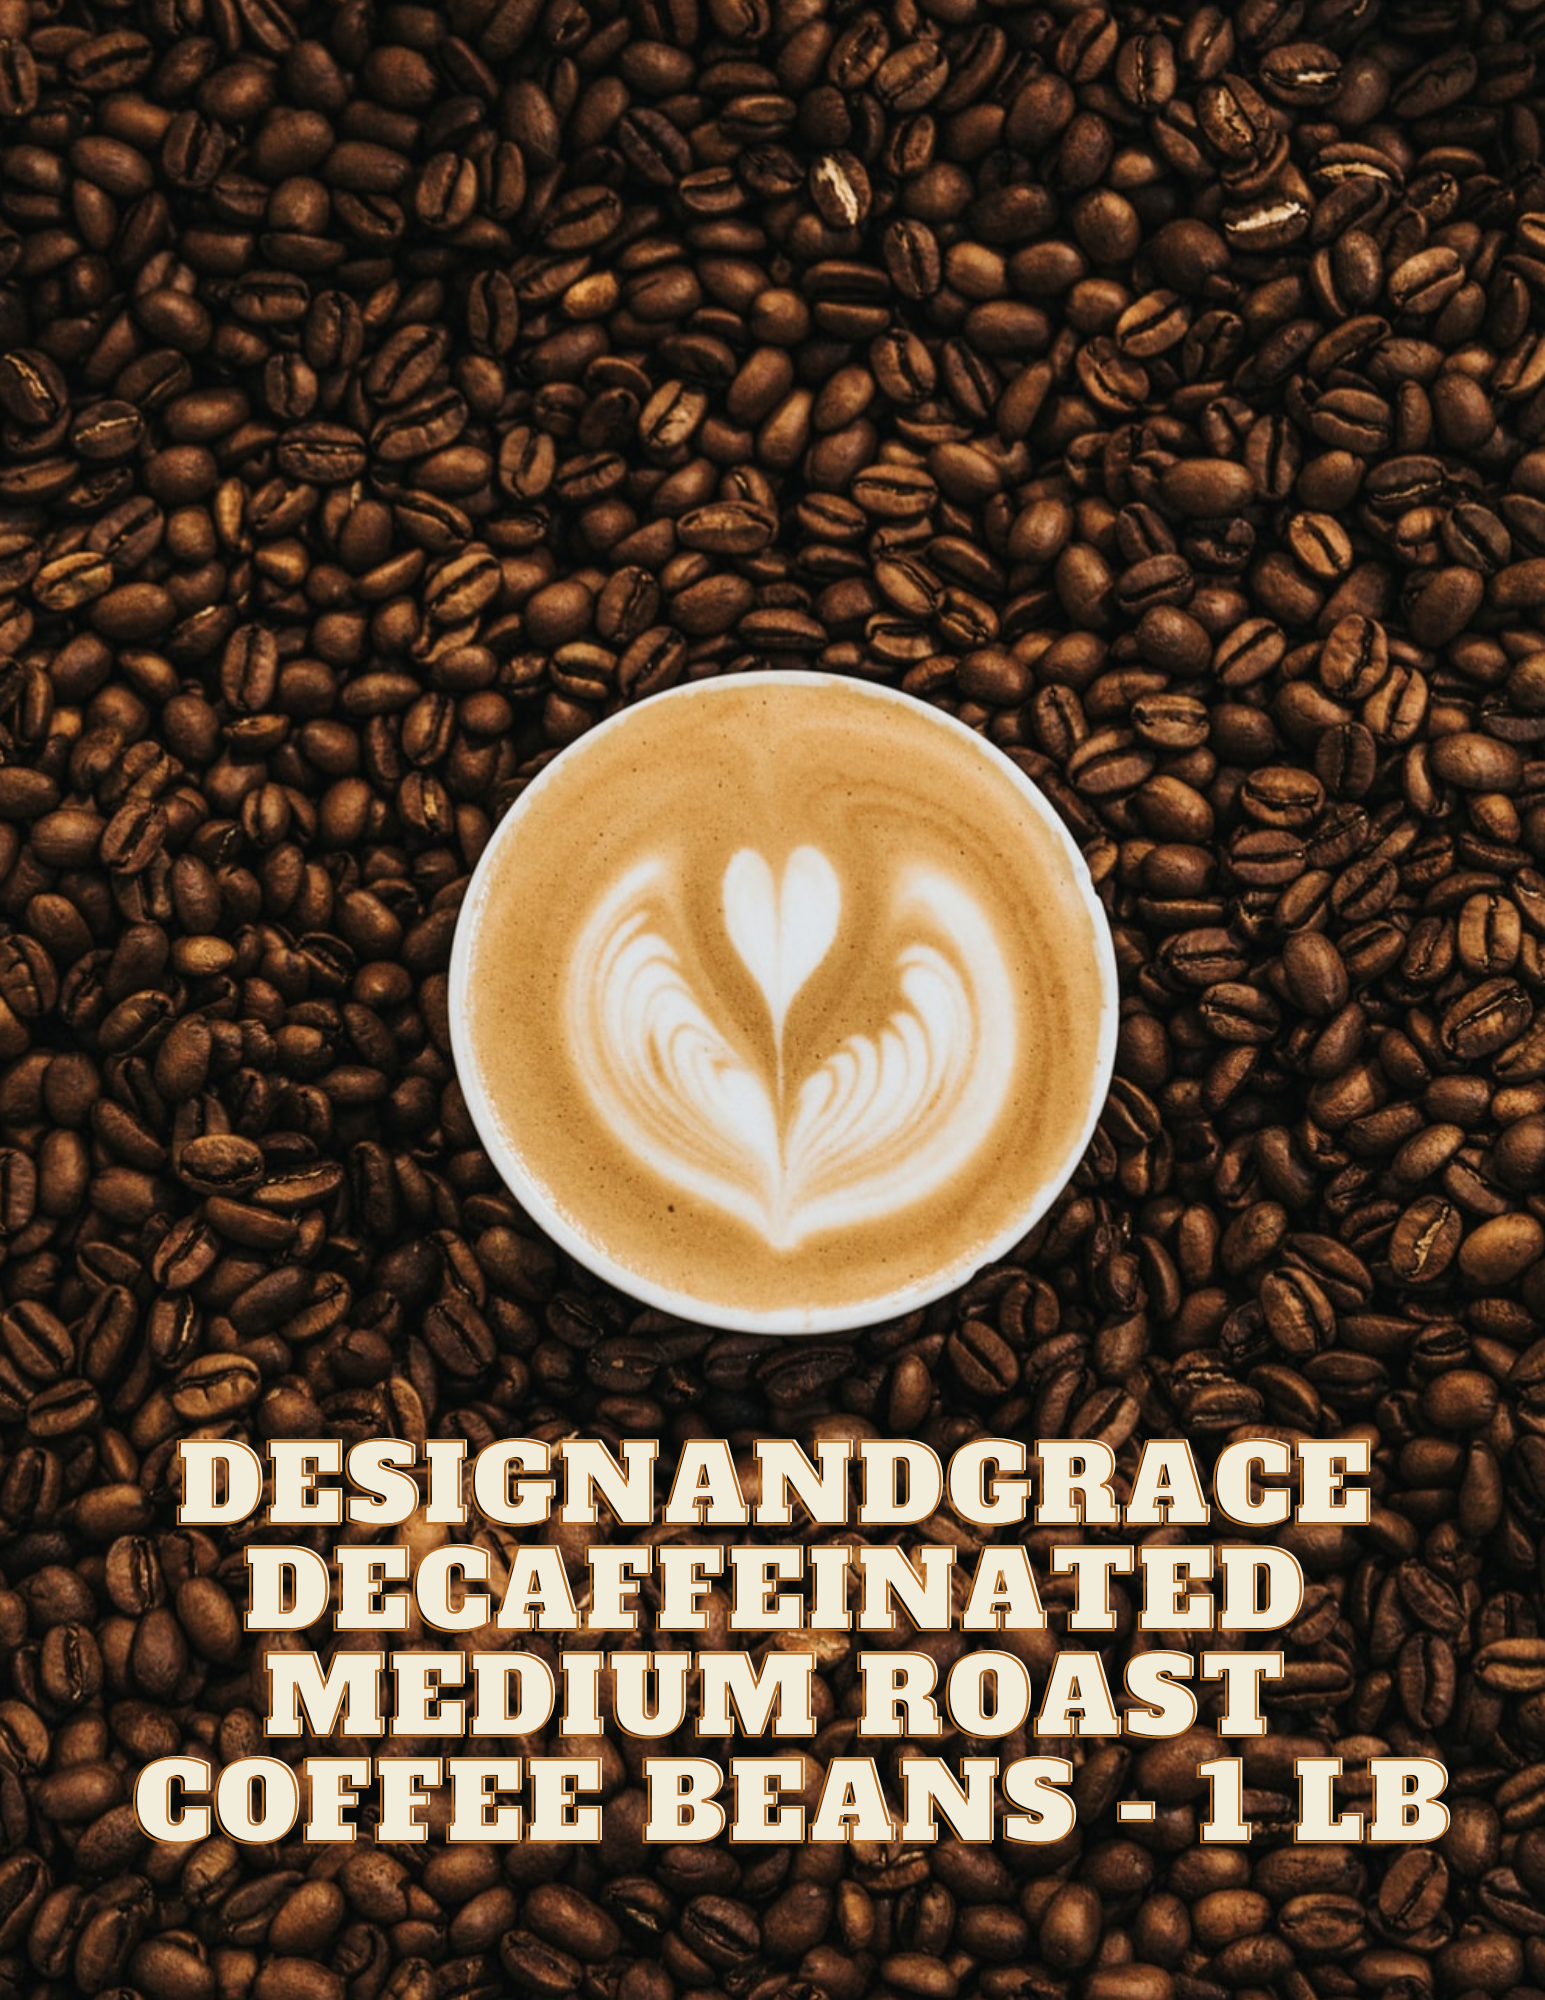 DesignandGrace Decaffeinated Medium Roast Coffee Beans - 1 lb